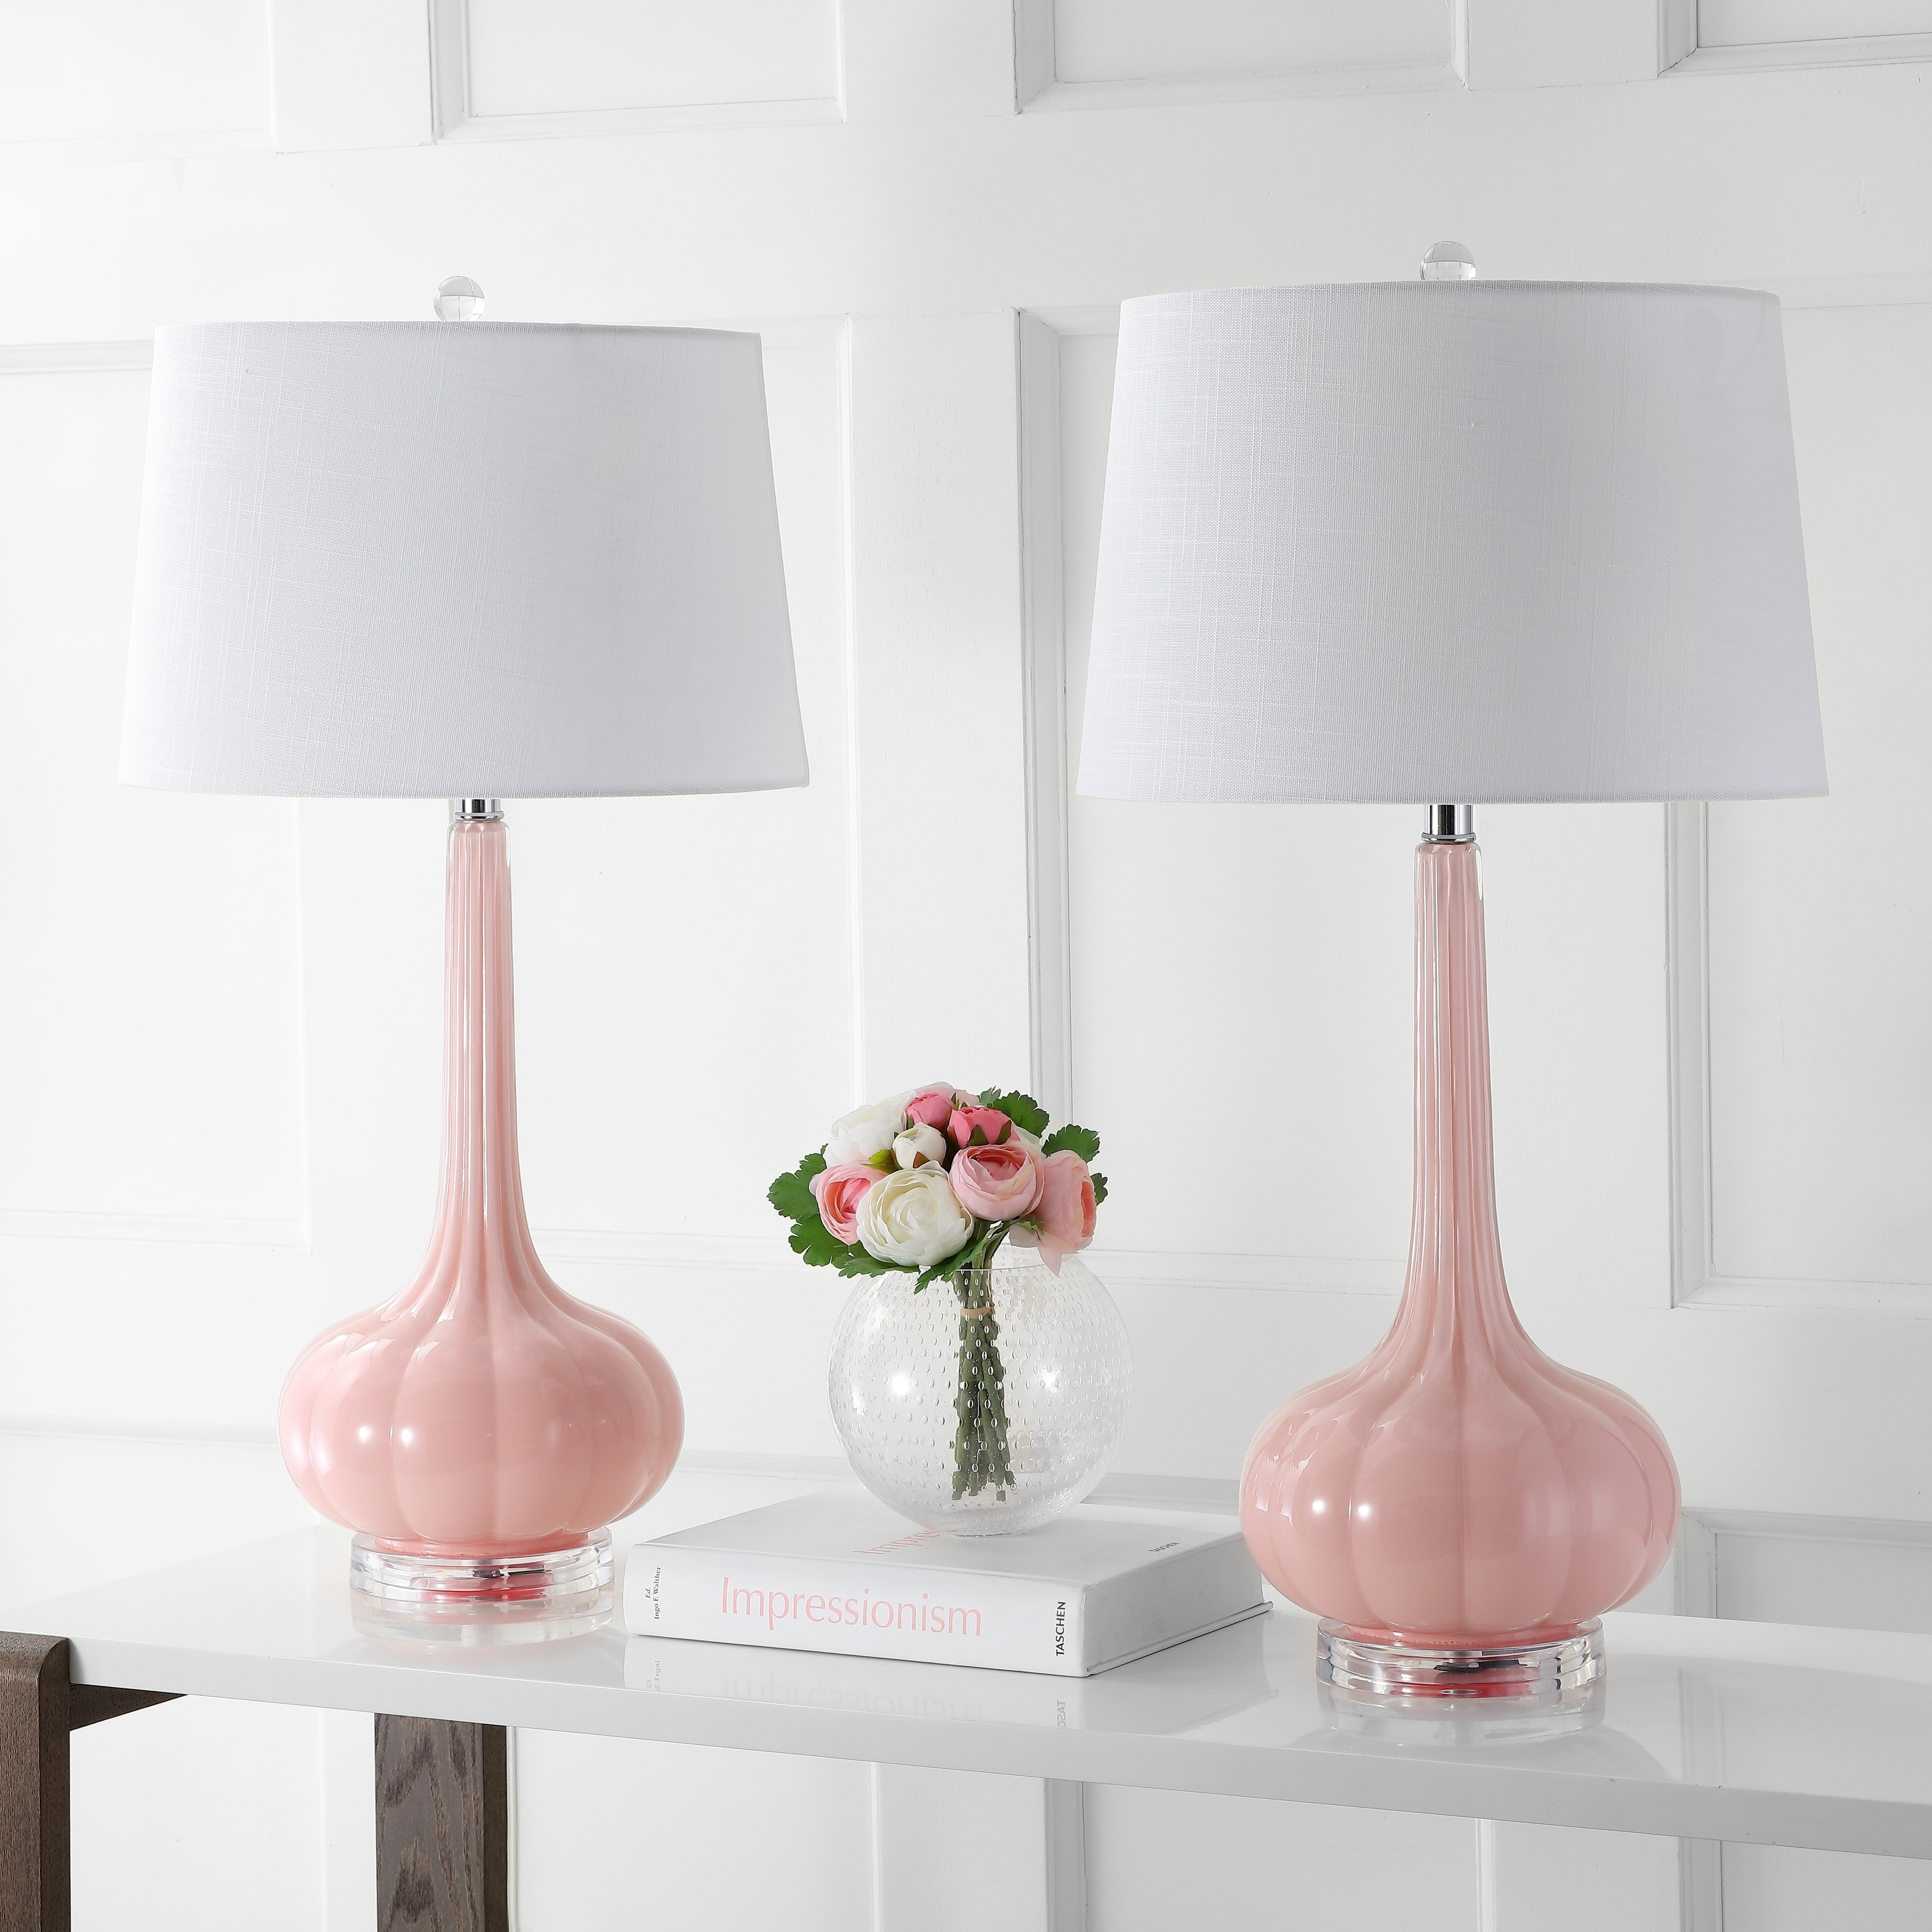 pink table lamp shade